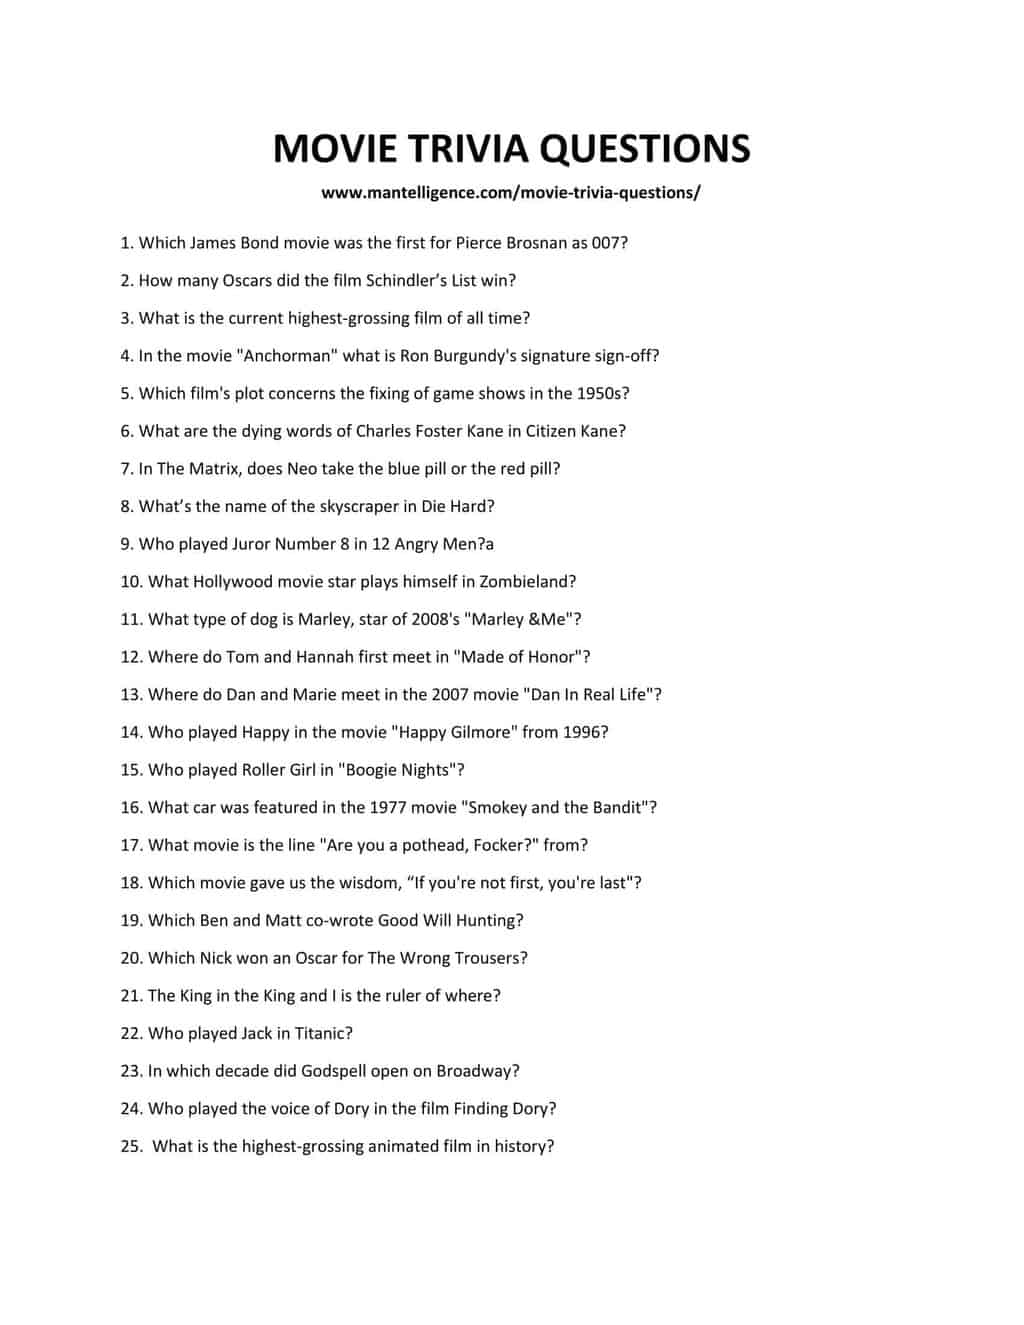 MOVIE TRIVIA QUESTIONS-1